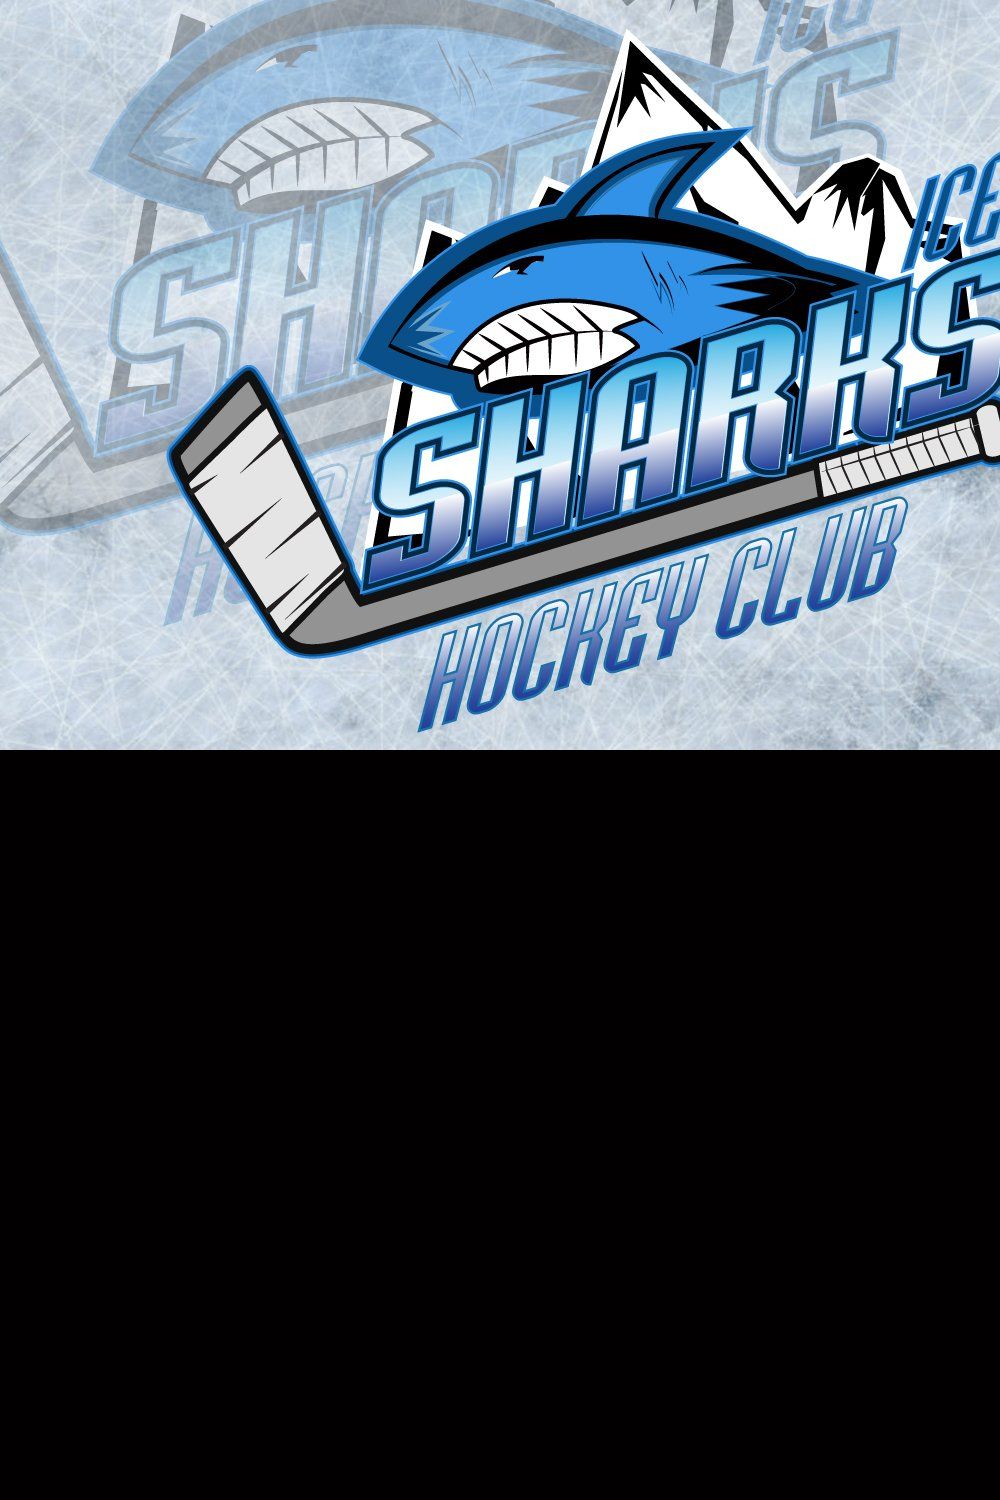 Sharks hockey club professional logo pinterest preview image.